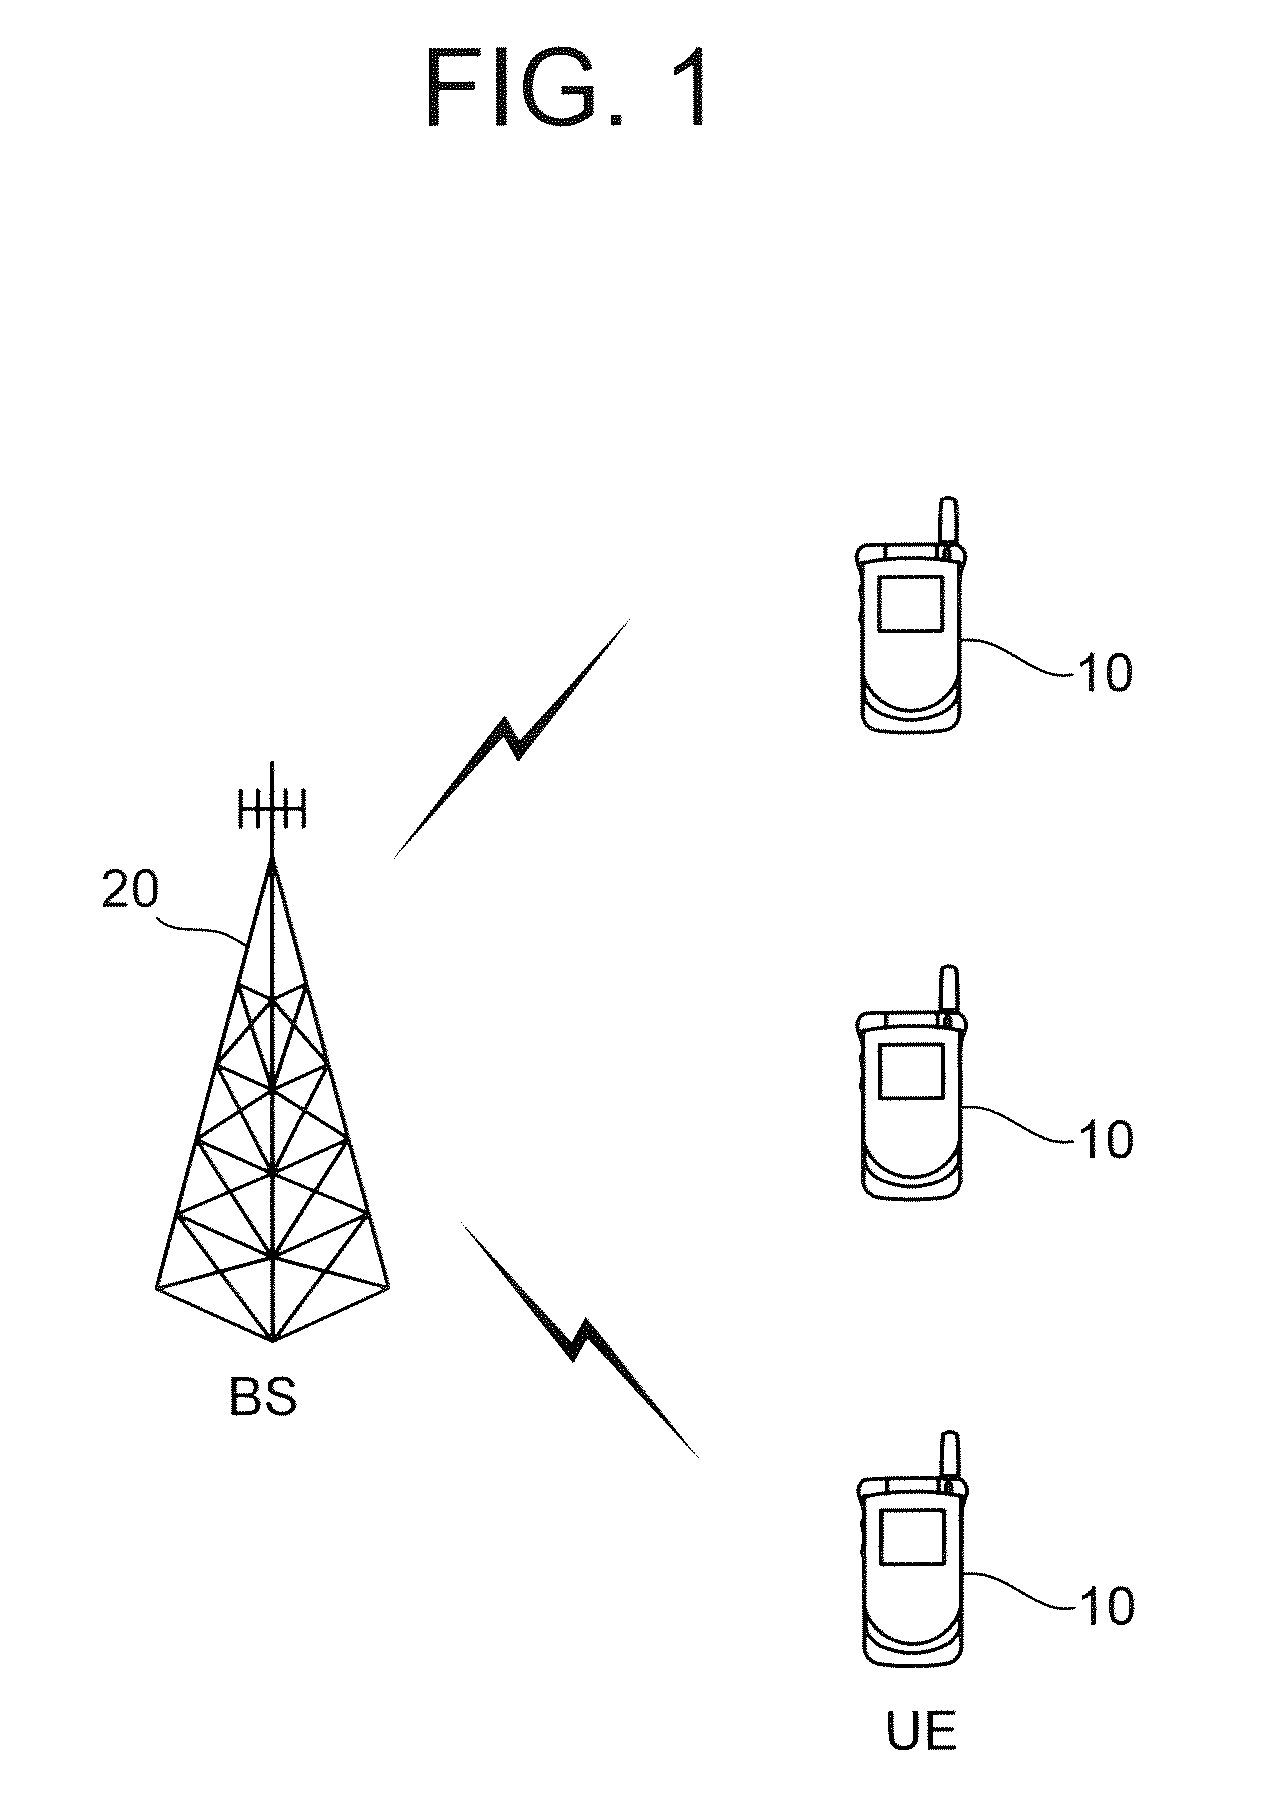 Method of transmitting feedback data in a multiple antenna system